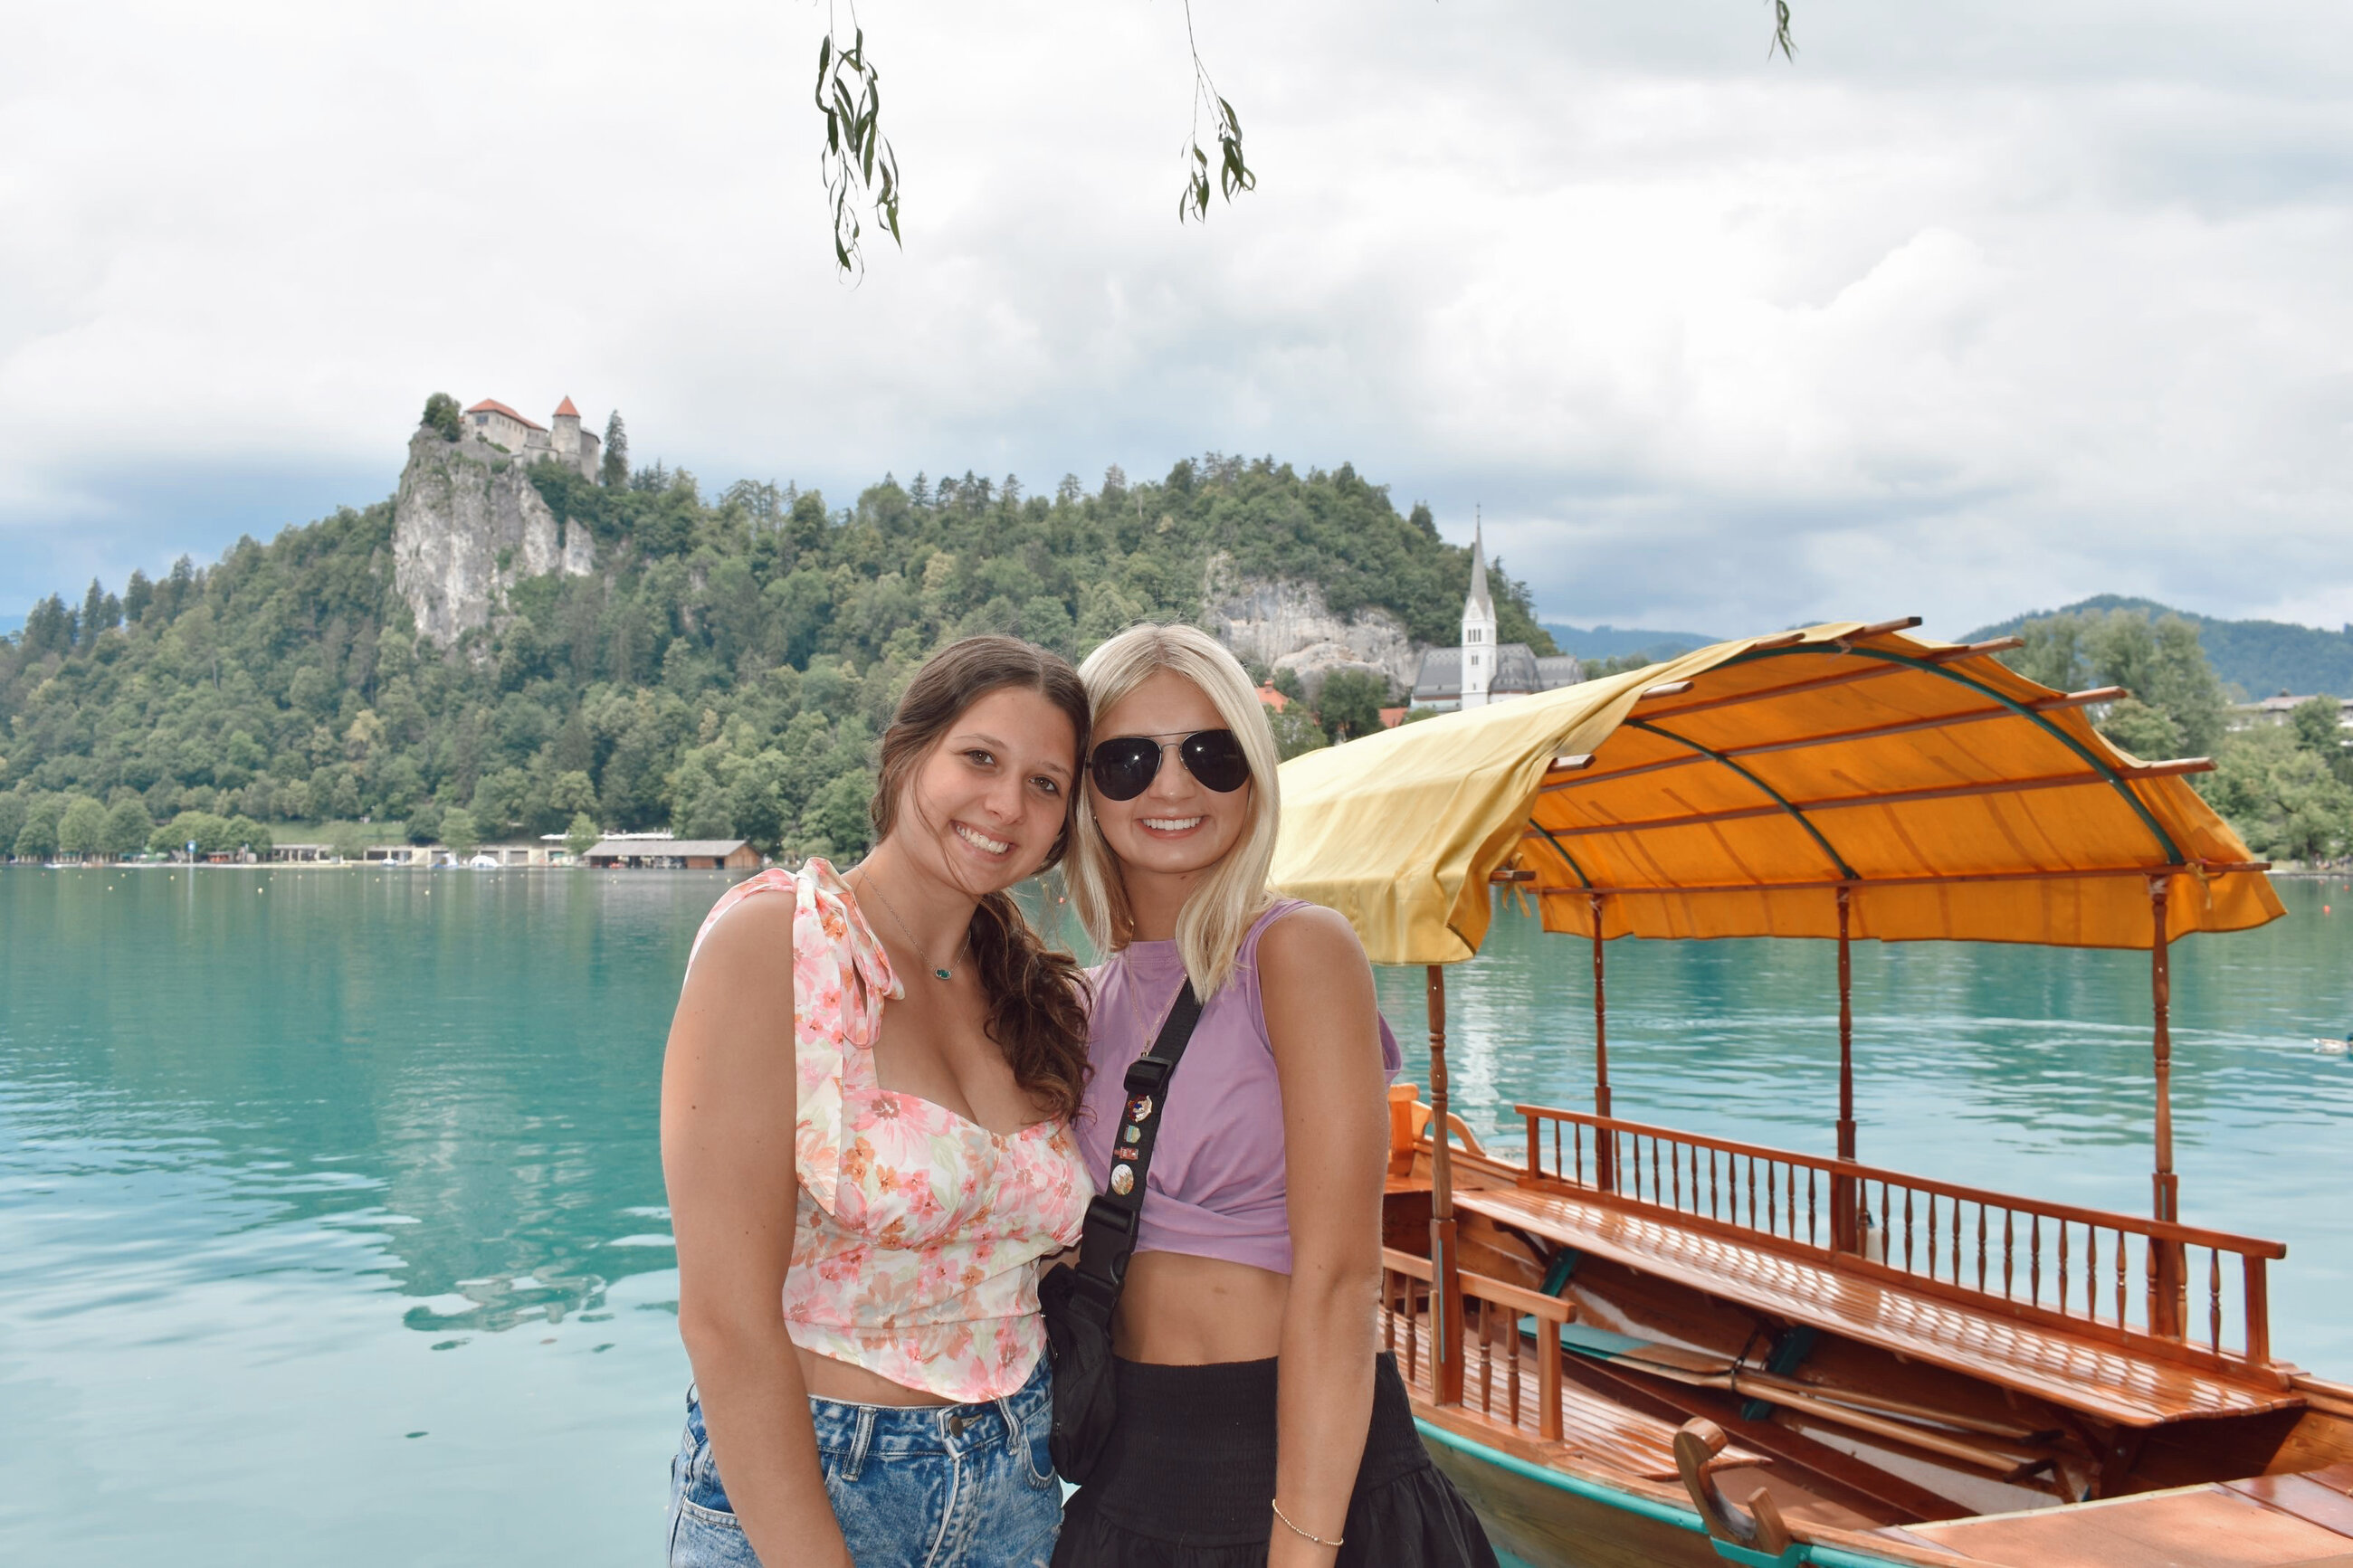 Us on Pletna boats in Bled!!